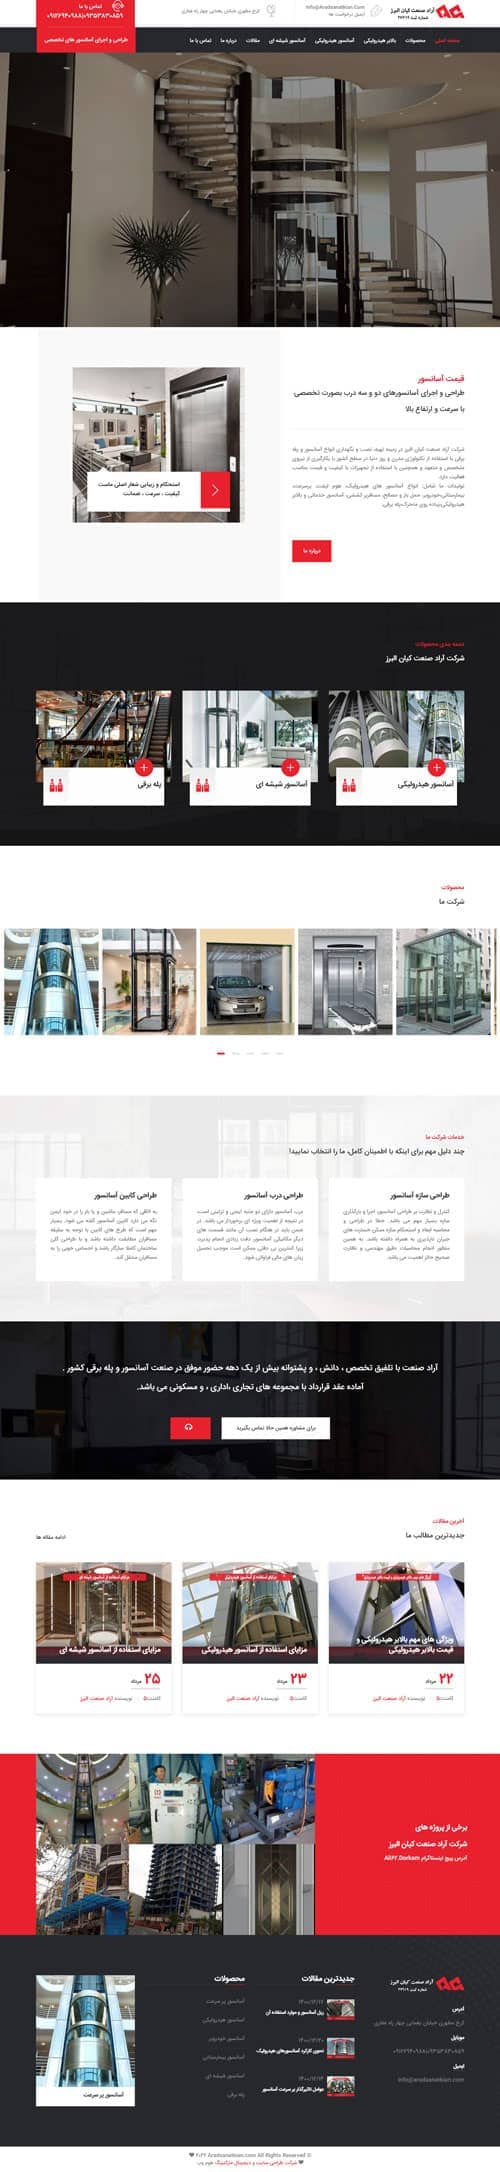 طراحی سایت شرکتی آراد صنعت کیان البرز